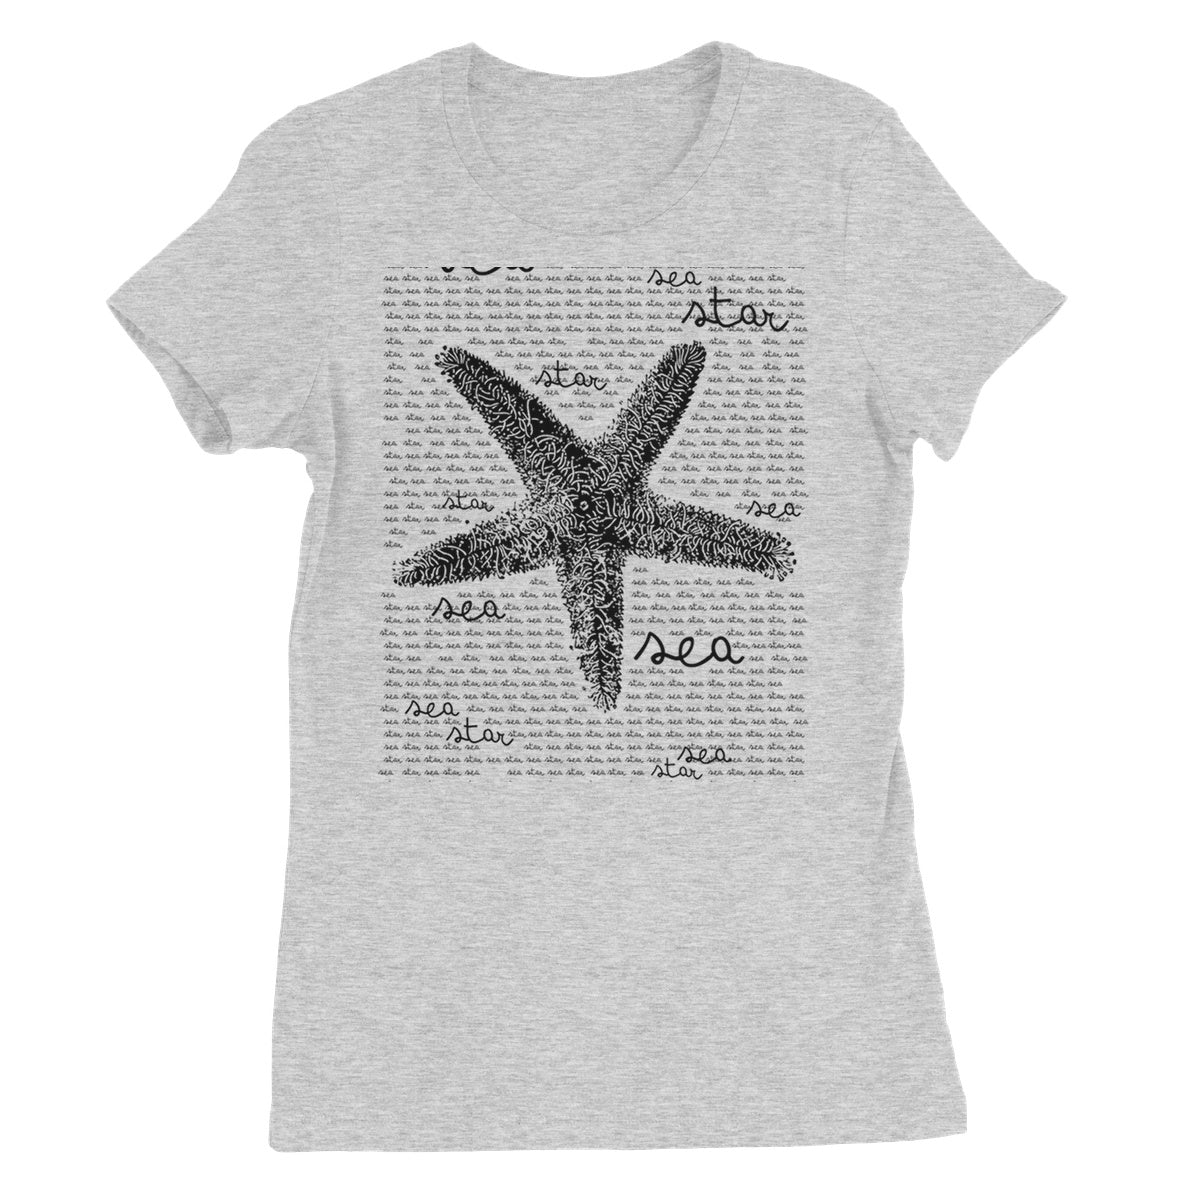 AQUA B&amp;W - 08 - Sea Star - Feines Jersey-T-Shirt für Frauen